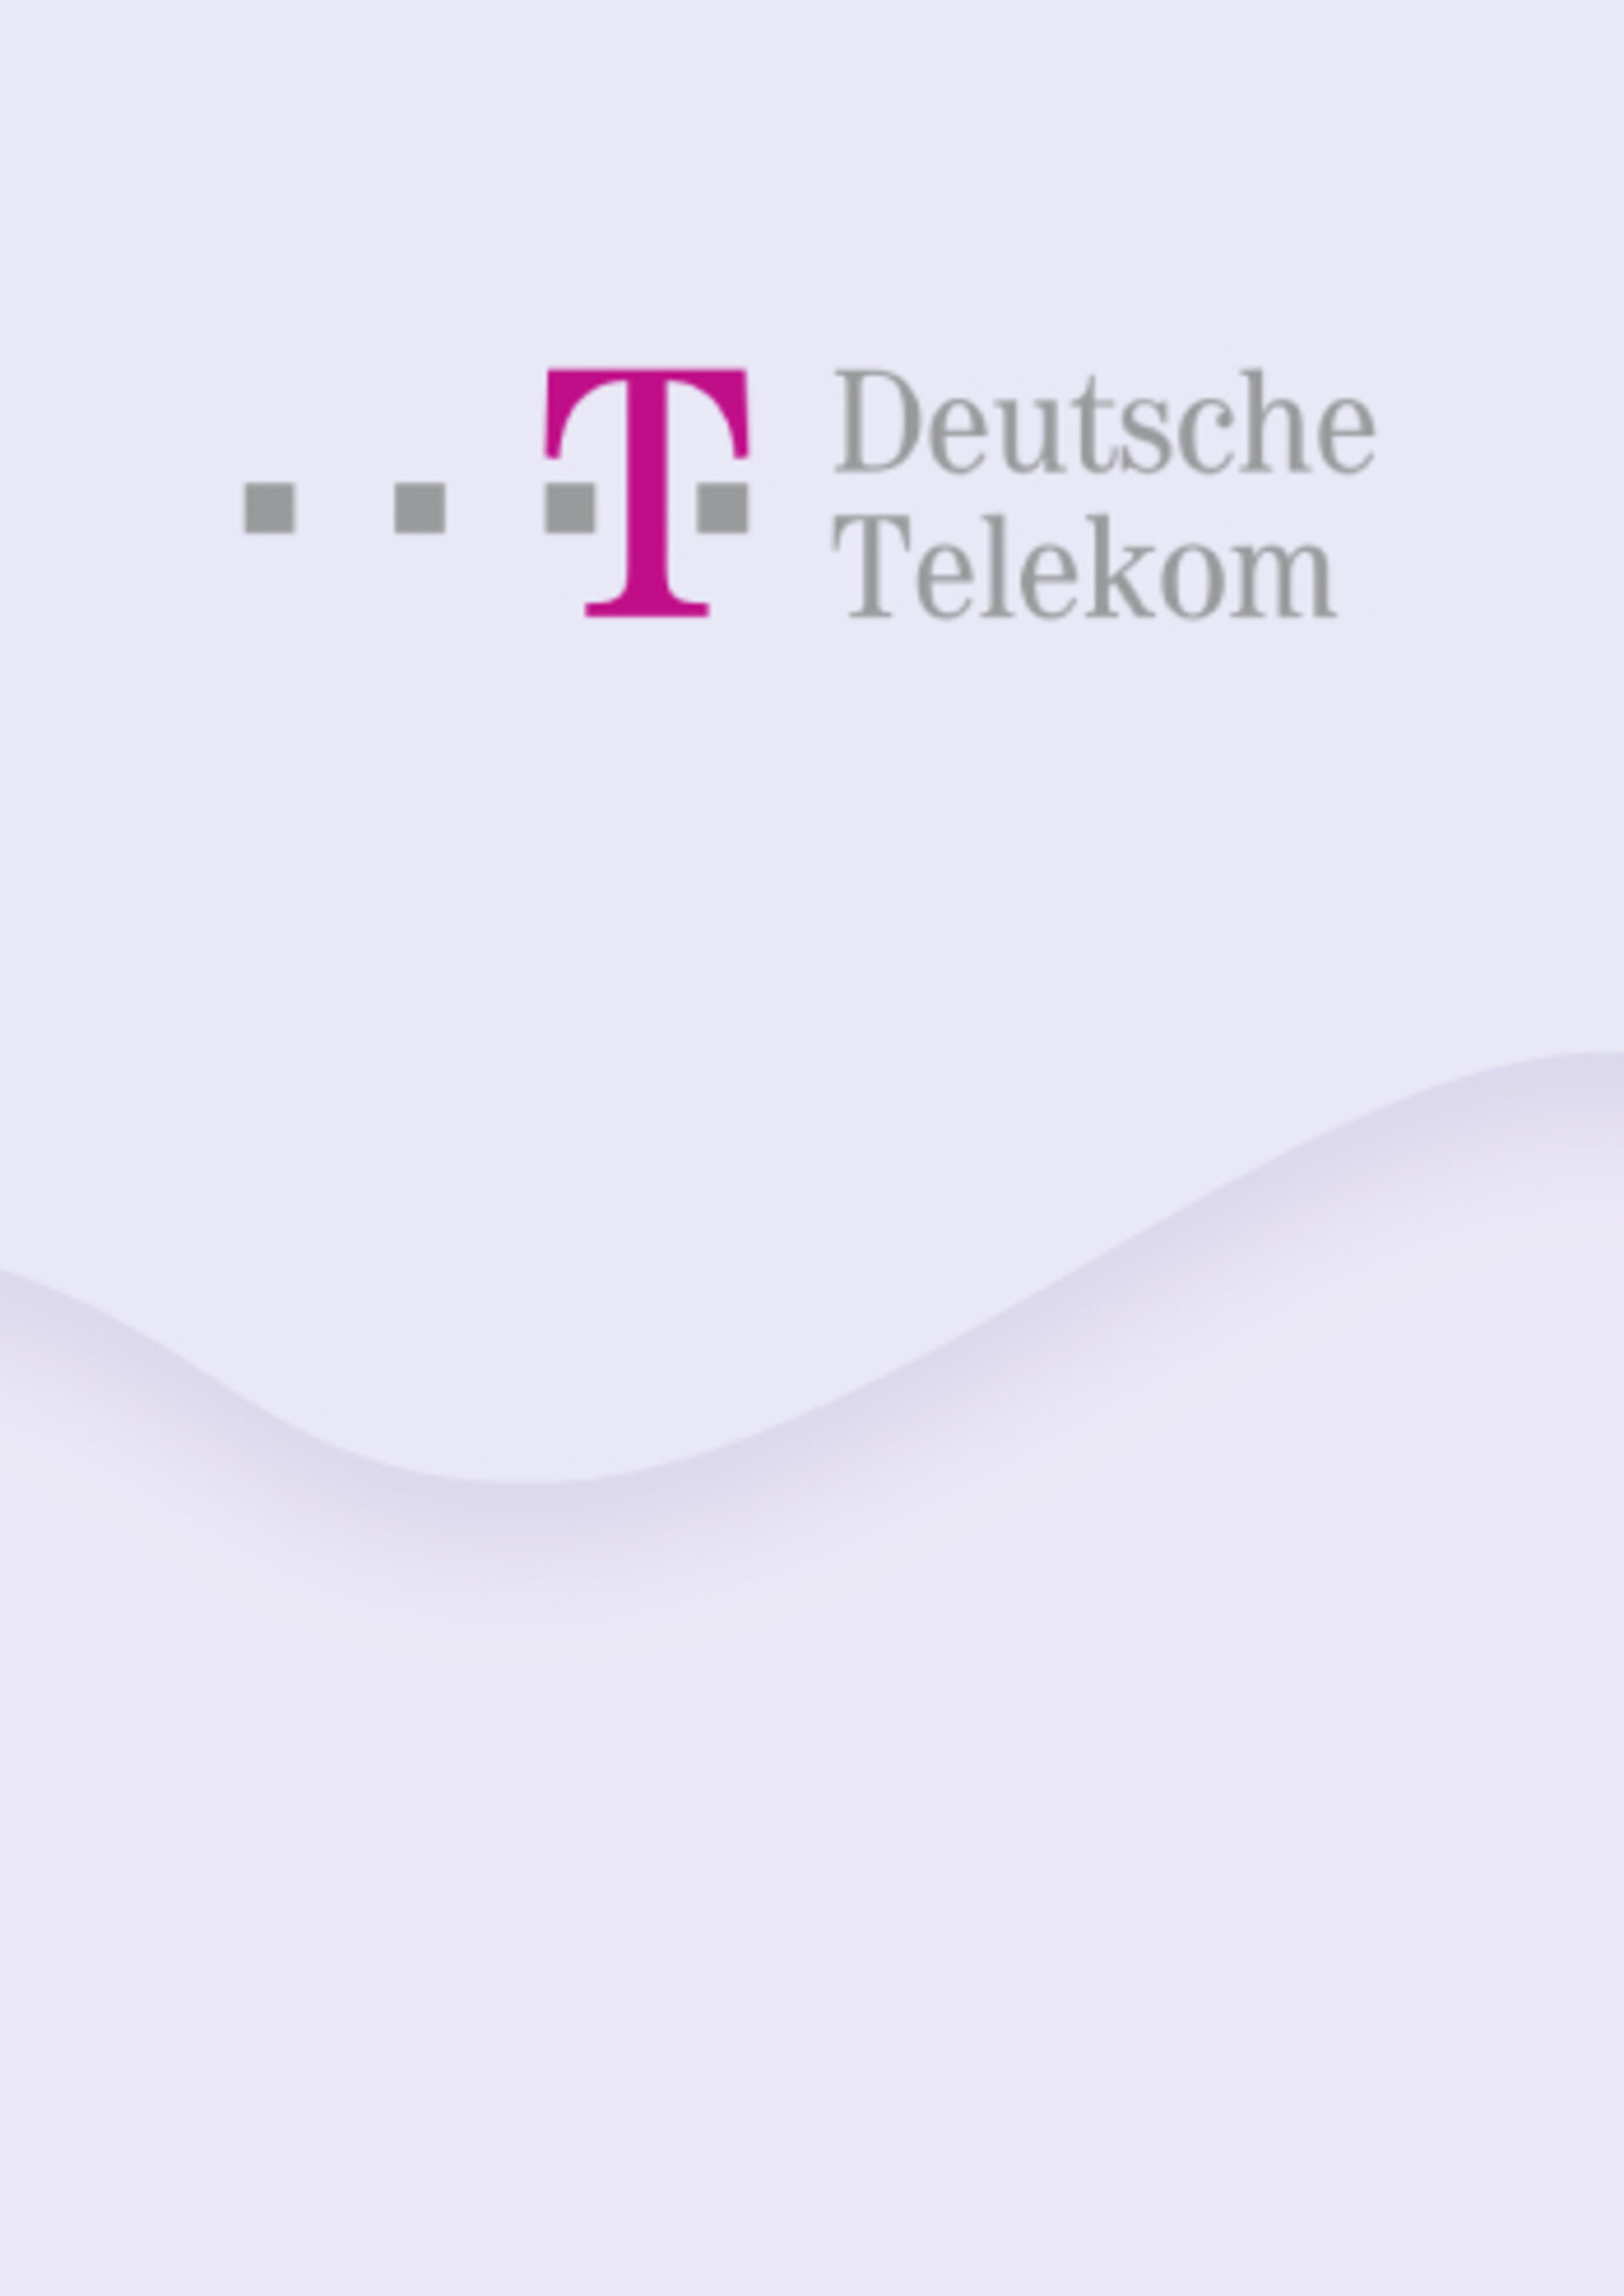 easy ENEBA recharge | | Deutsche cheaper & Buy top-up Telekom Fast